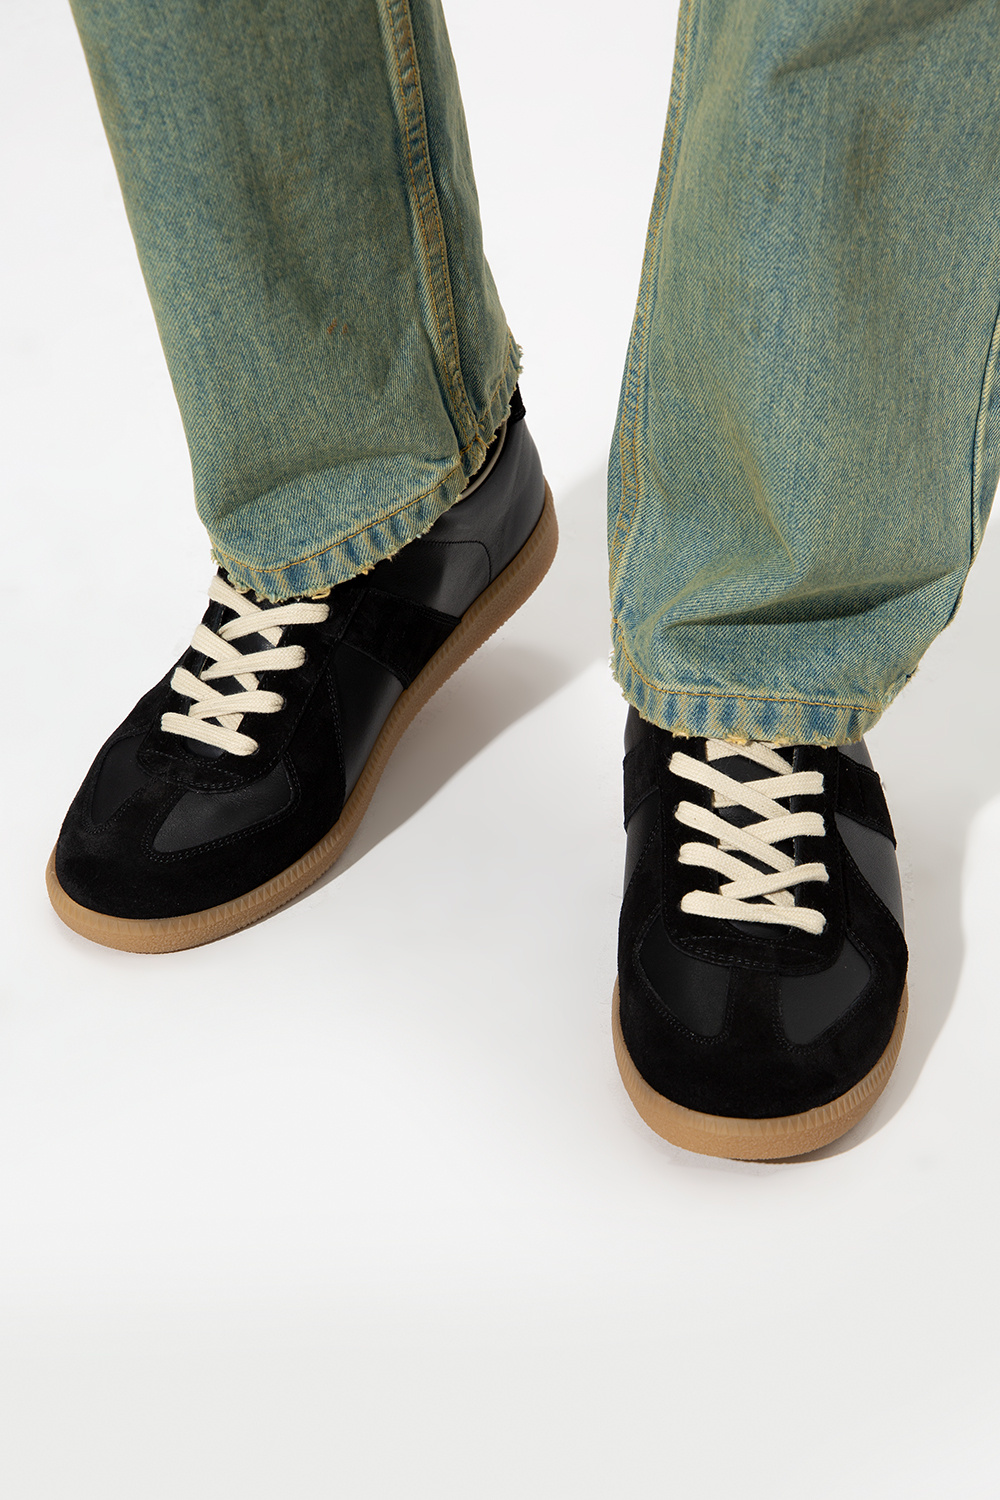 Maison Margiela 'Replica' sneakers | Men's Shoes | Vitkac